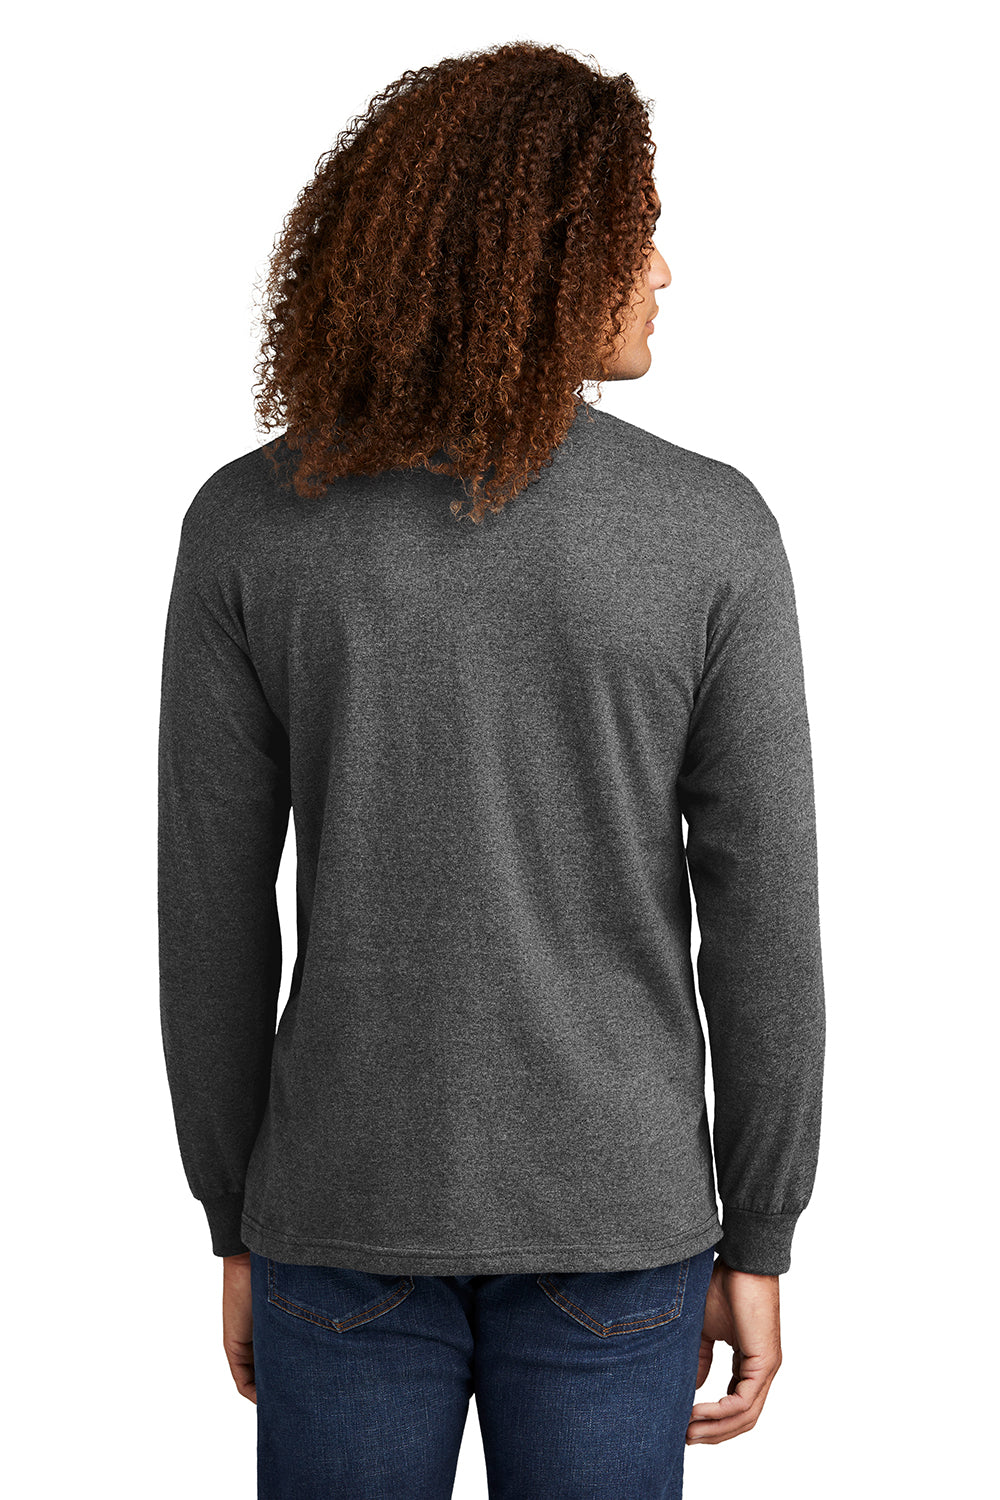 American Apparel AL1304/1304 Mens Long Sleeve Crewneck T-Shirt Heather Charcoal Grey Model Back